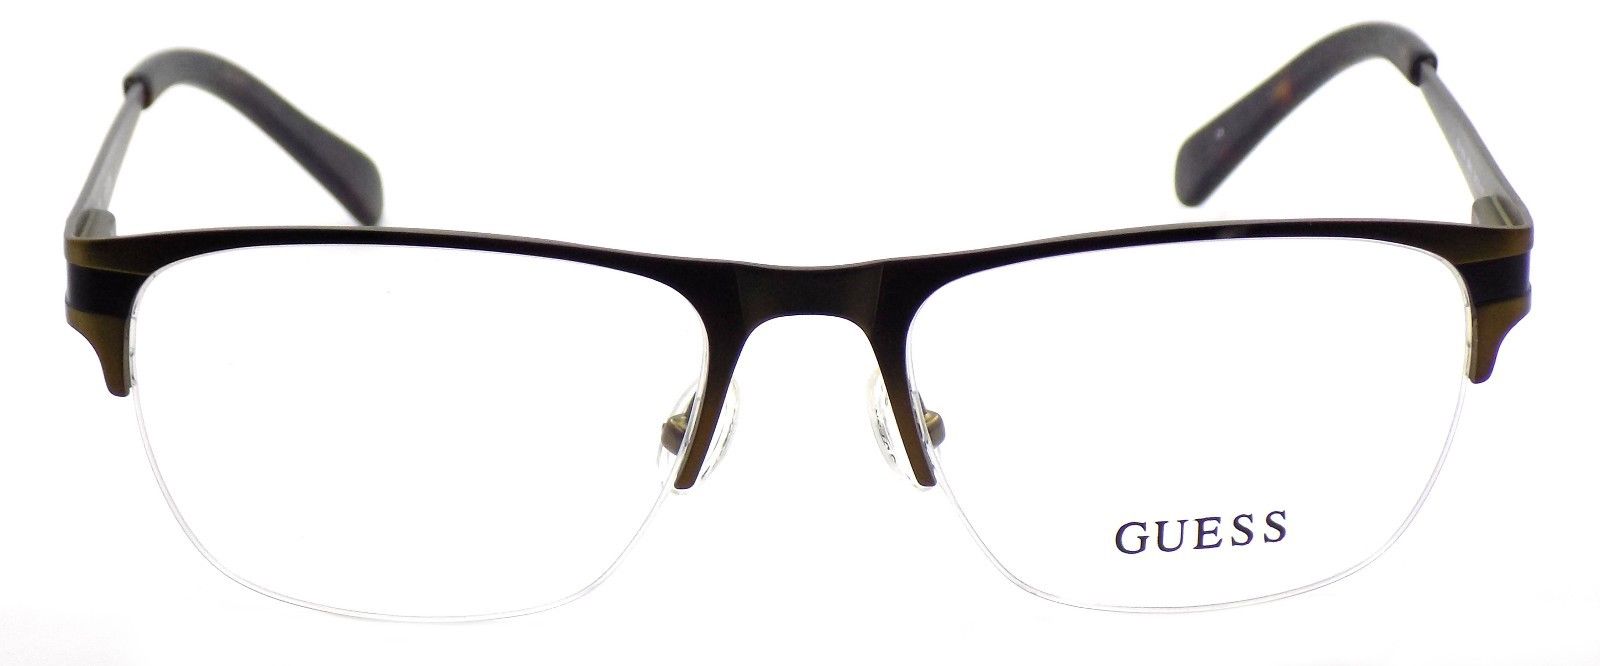 2-GUESS GU1814 BRN Men's Half-Rim Eyeglasses Frames 54-18-140 Brown Bronze + CASE-715583920316-IKSpecs